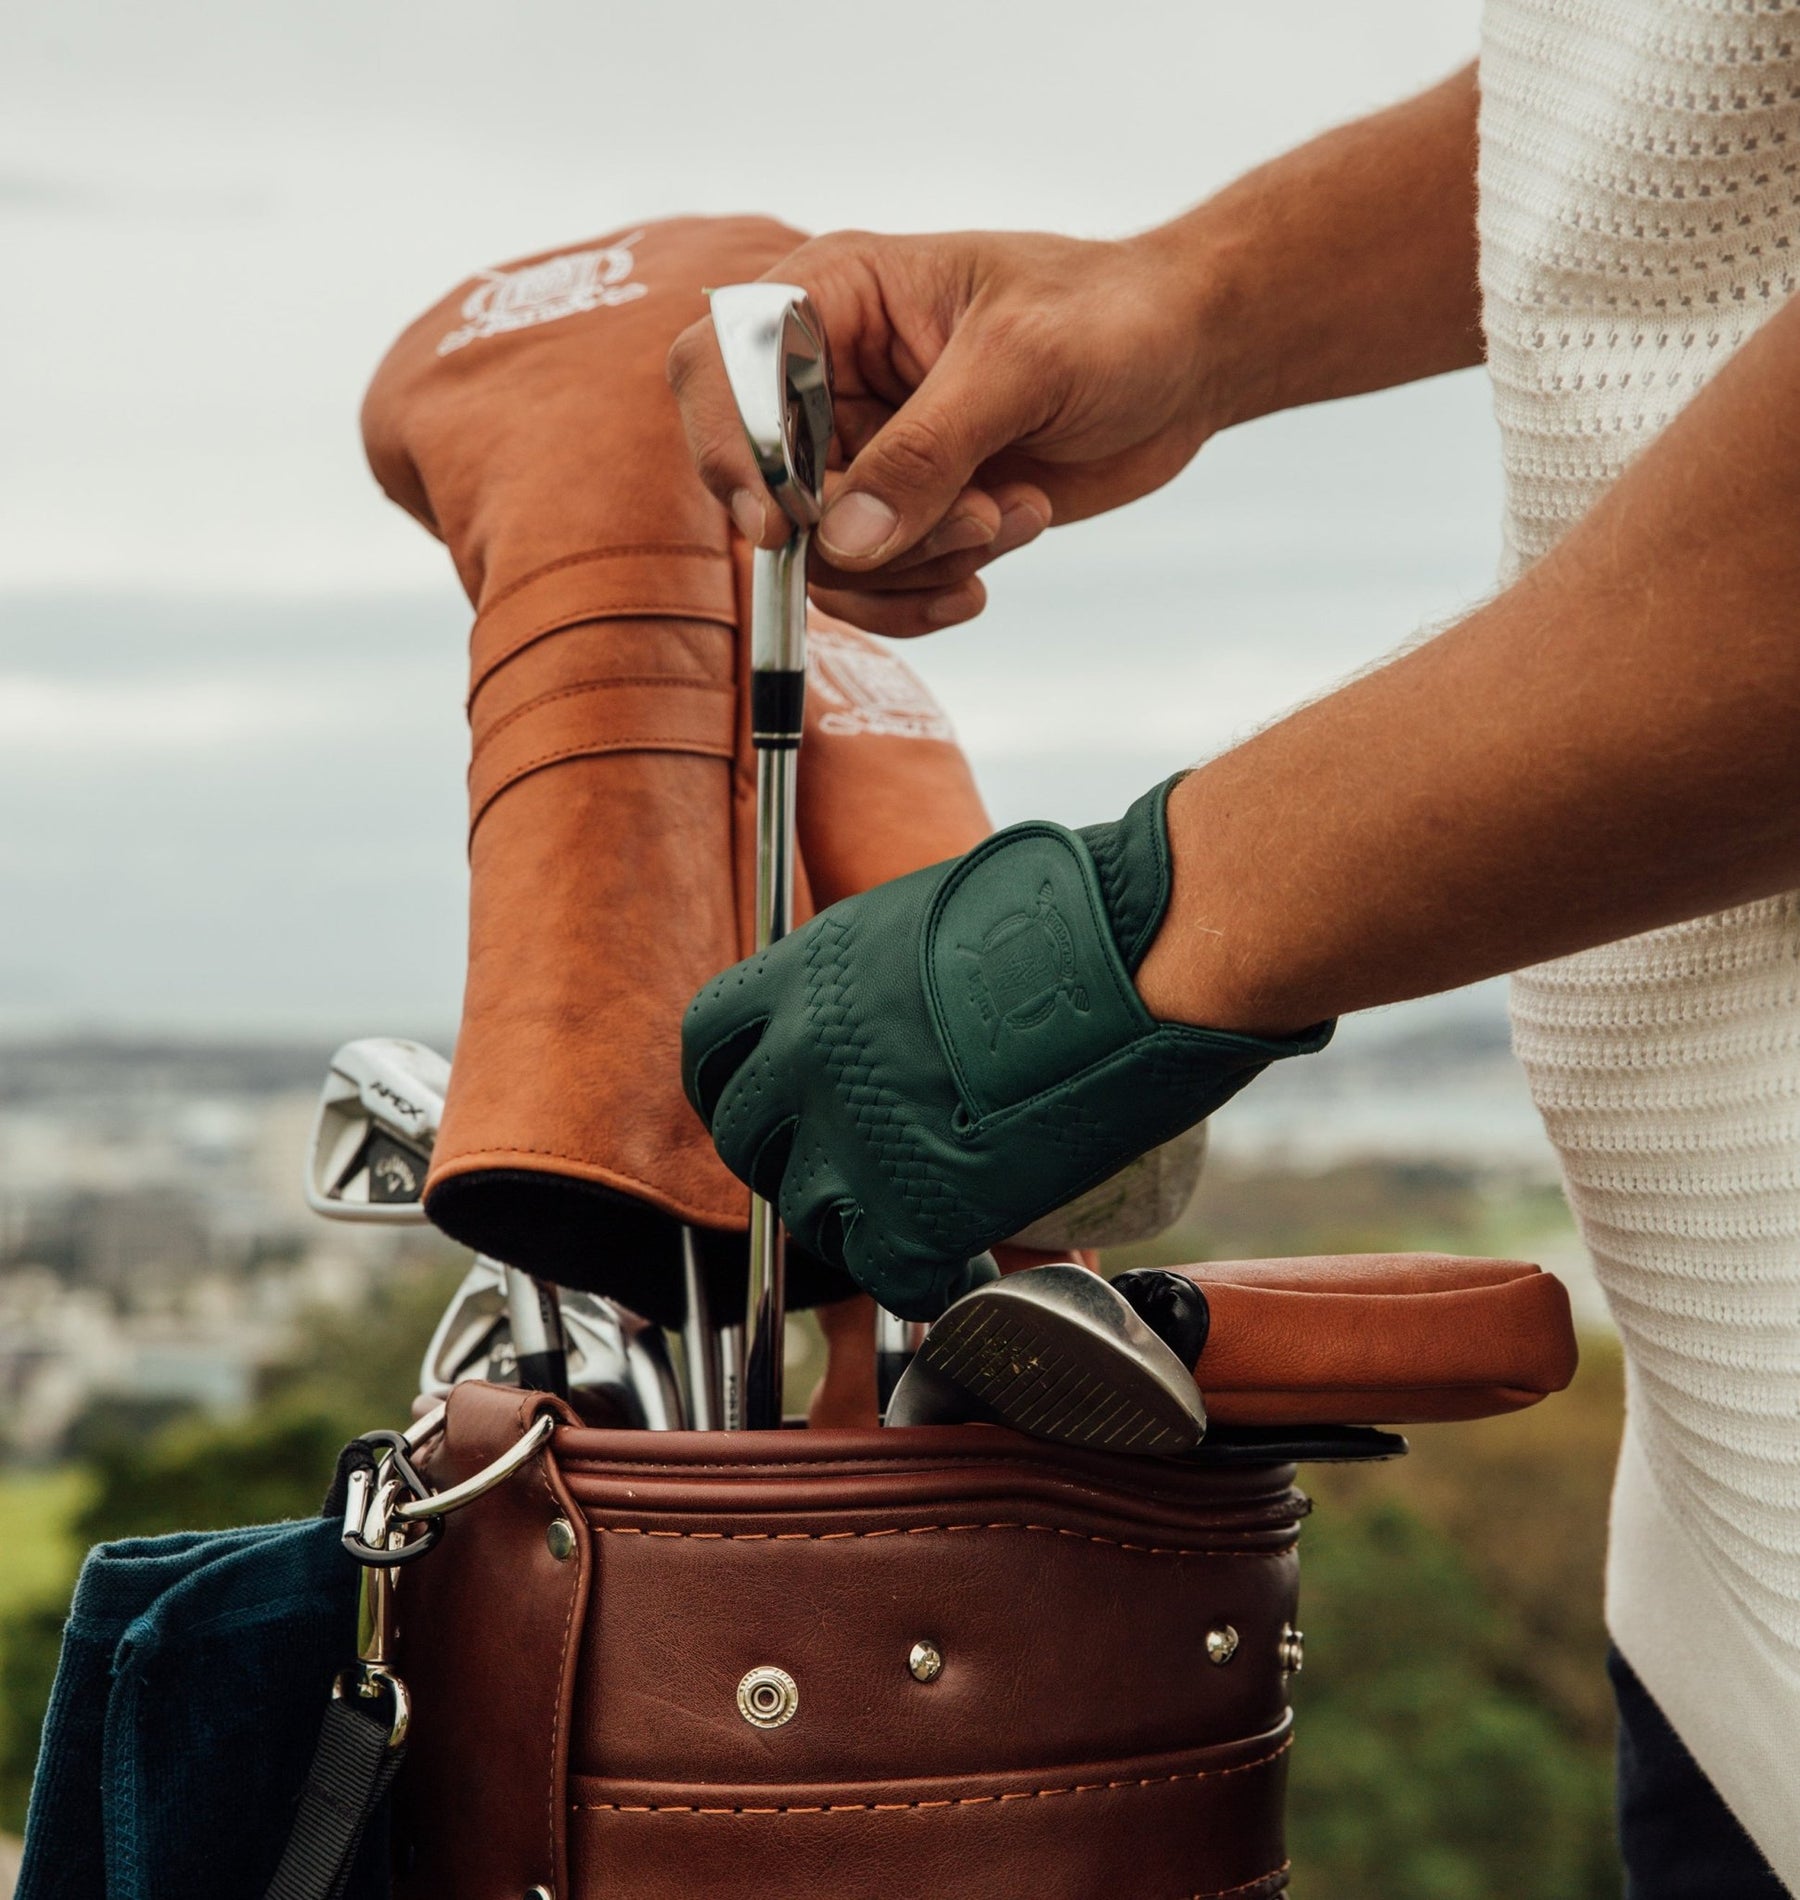 PRO Cabretta Leather Golf Gloves (3 Pack) - Multi Color - MODEST VINTAGE PLAYER LTD